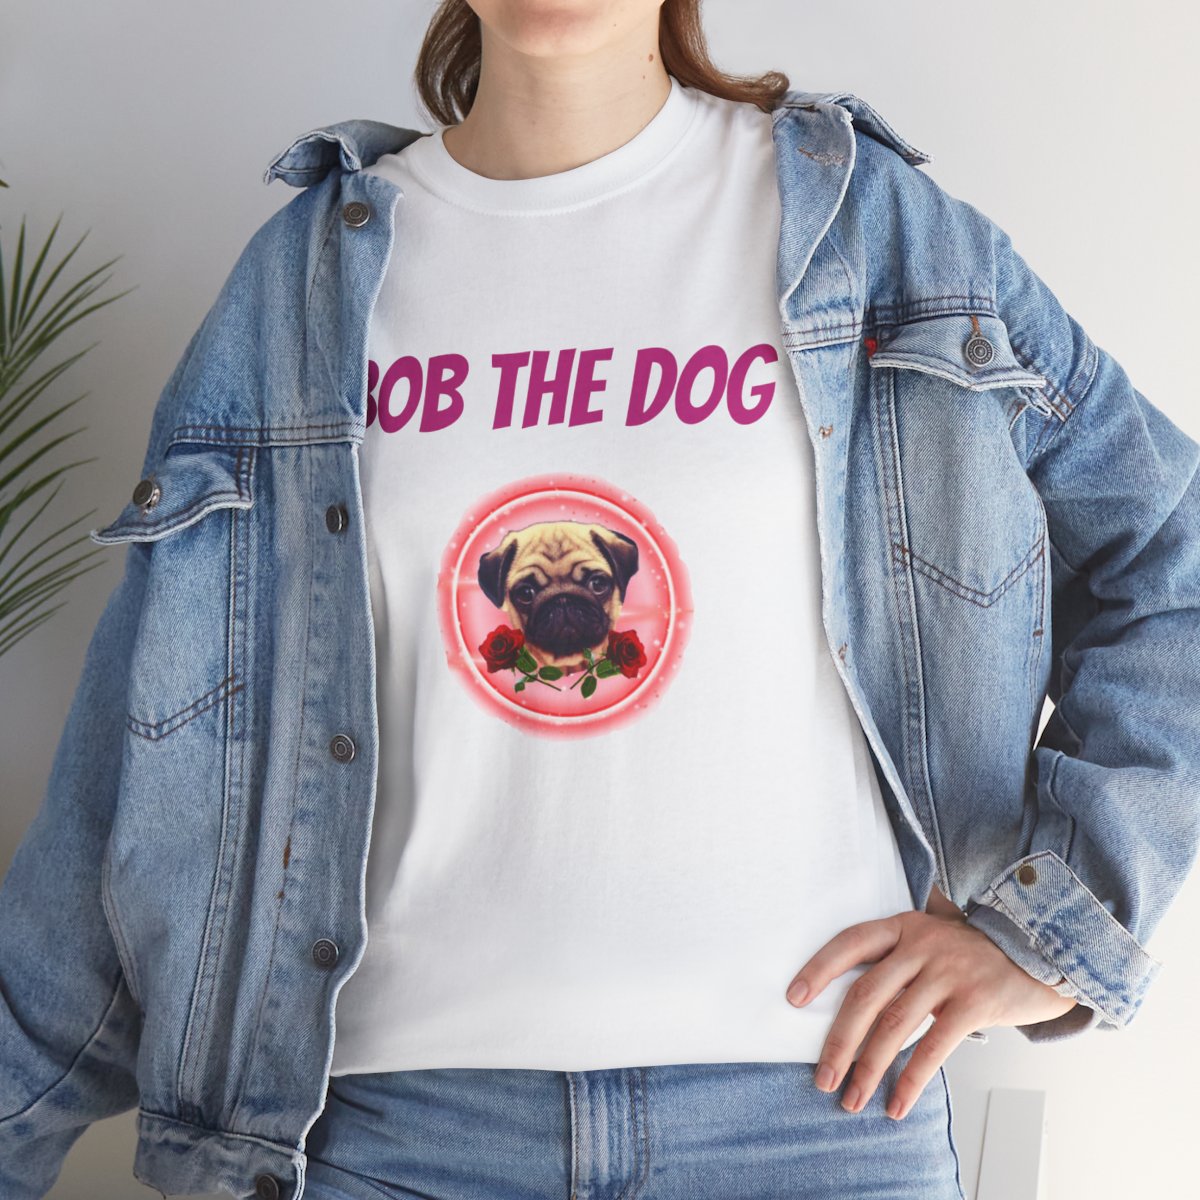 Bob the Dog T Shirt  product thumbnail image